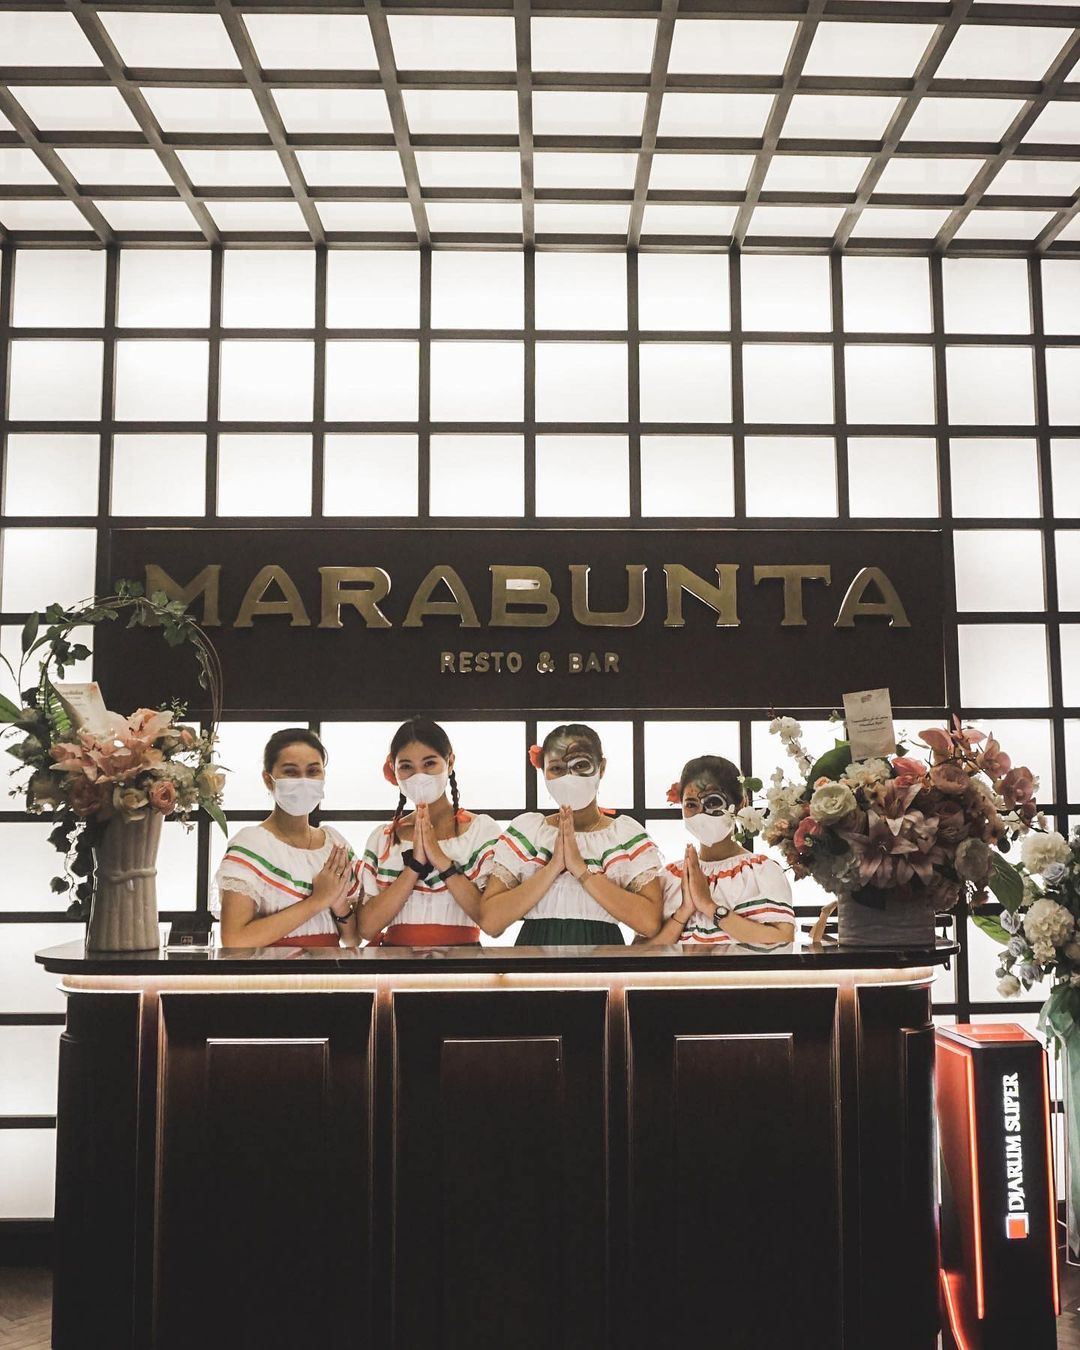 Review Marabunta Resto Bar Semarang Image From @ryansoegi